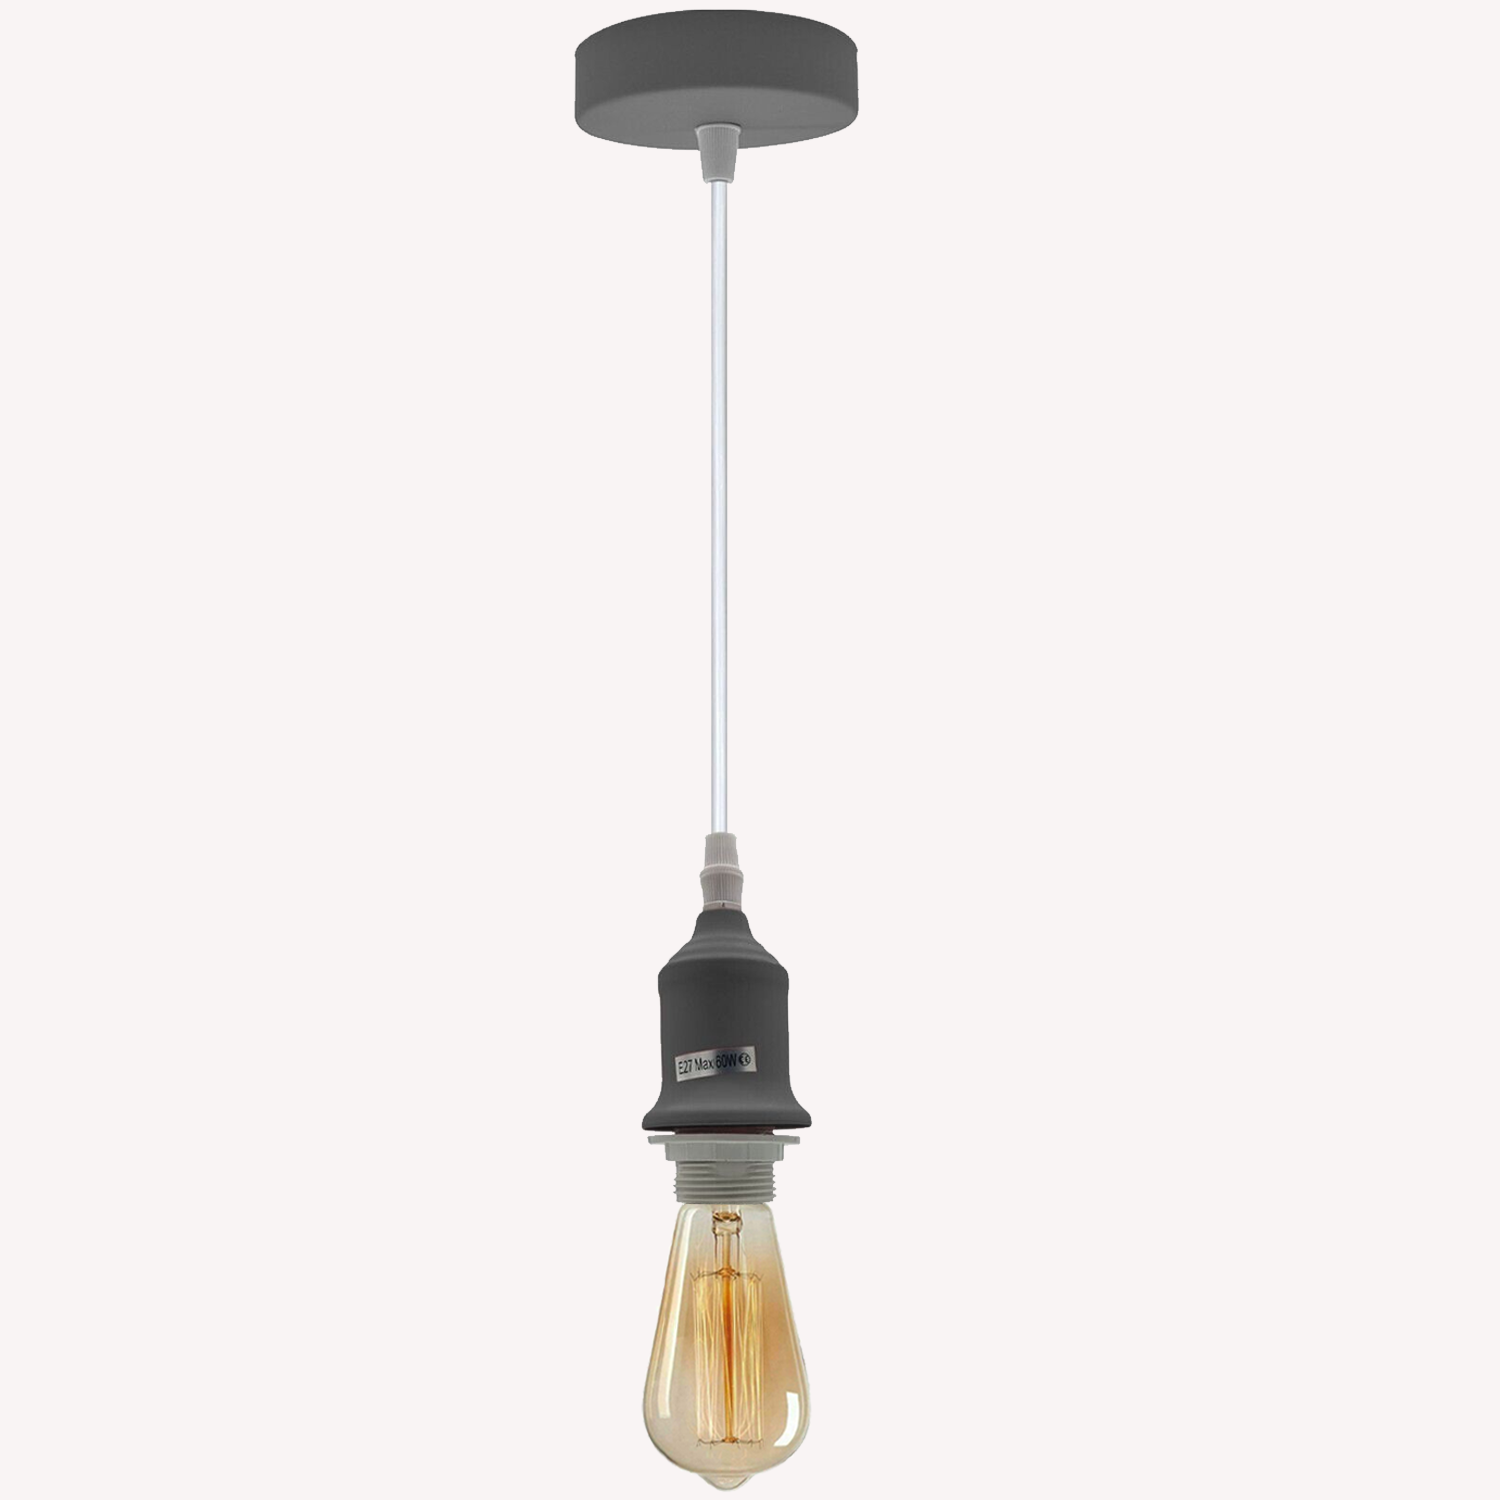 E27 Pendant Holder Ceiling Light Fitting Vintage Industrial hunging lamp set